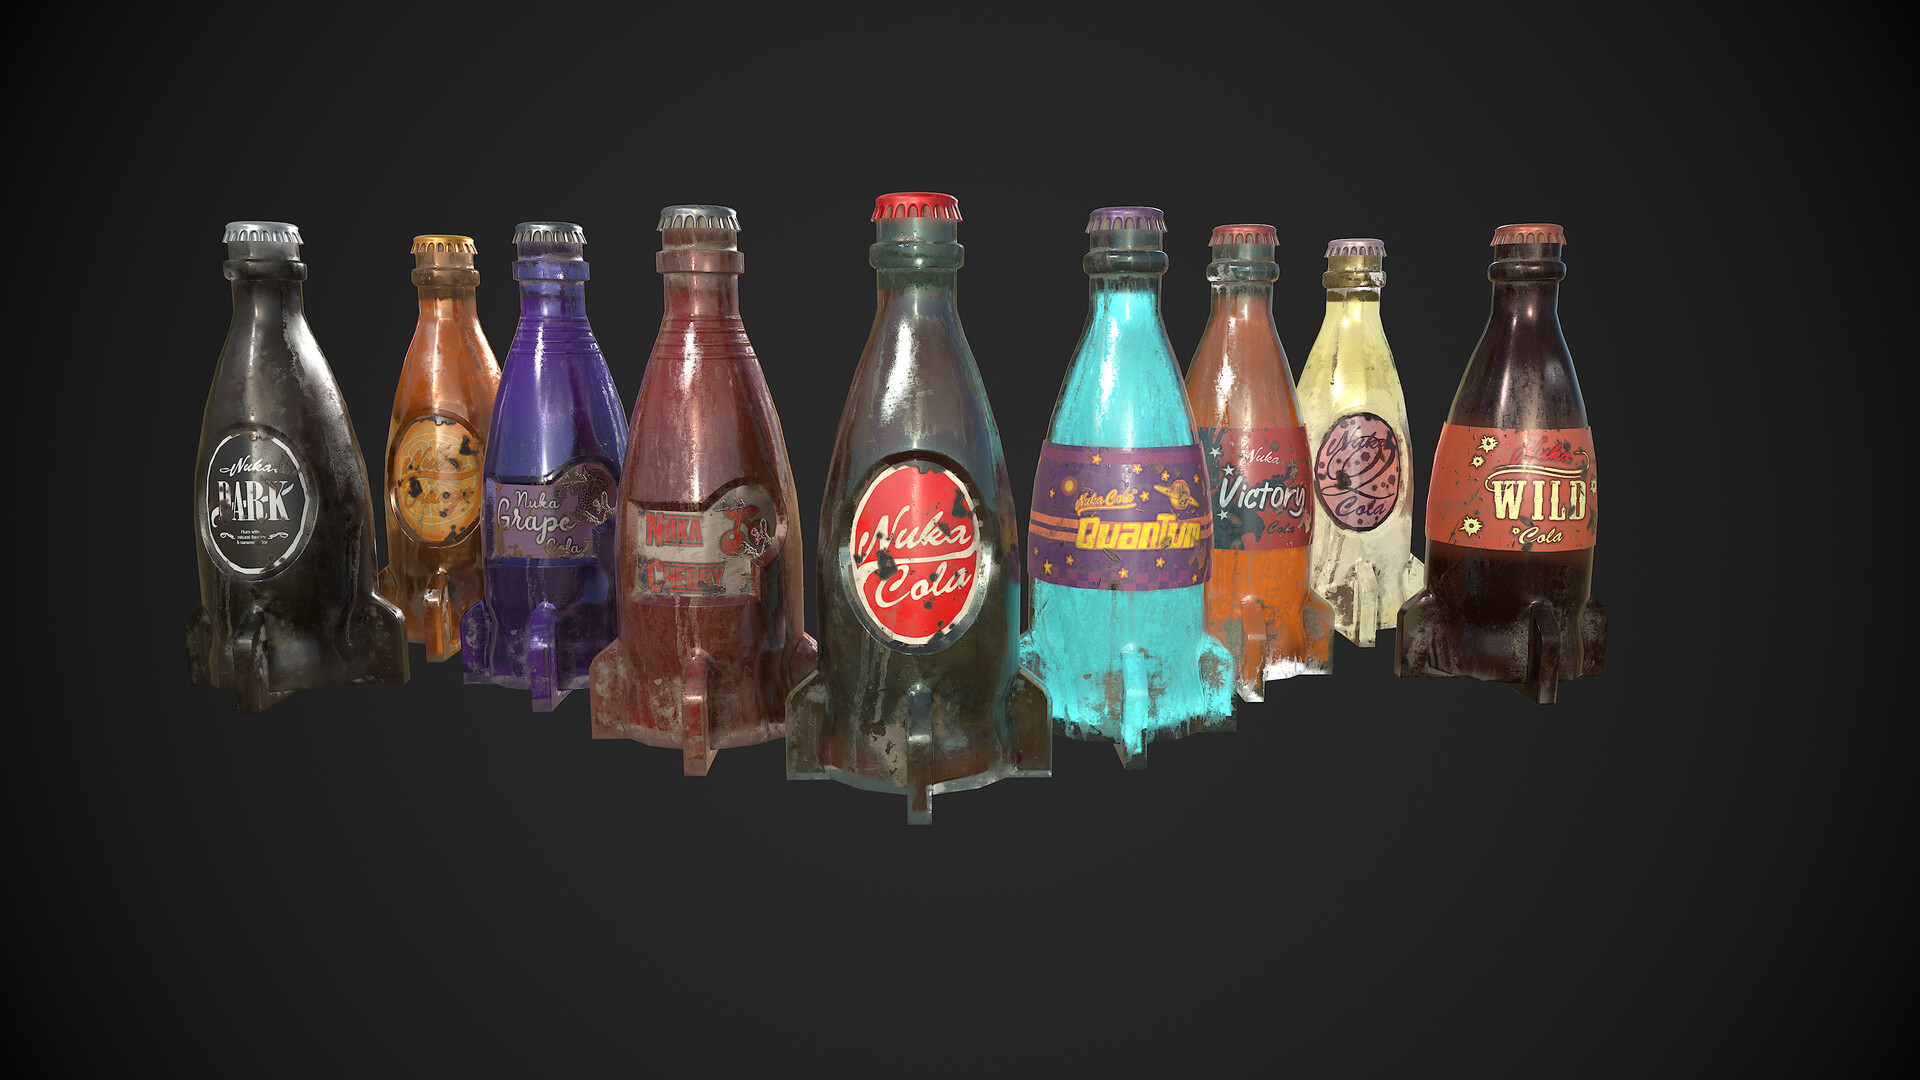 Fallout 4 nuka cola bottle фото 82